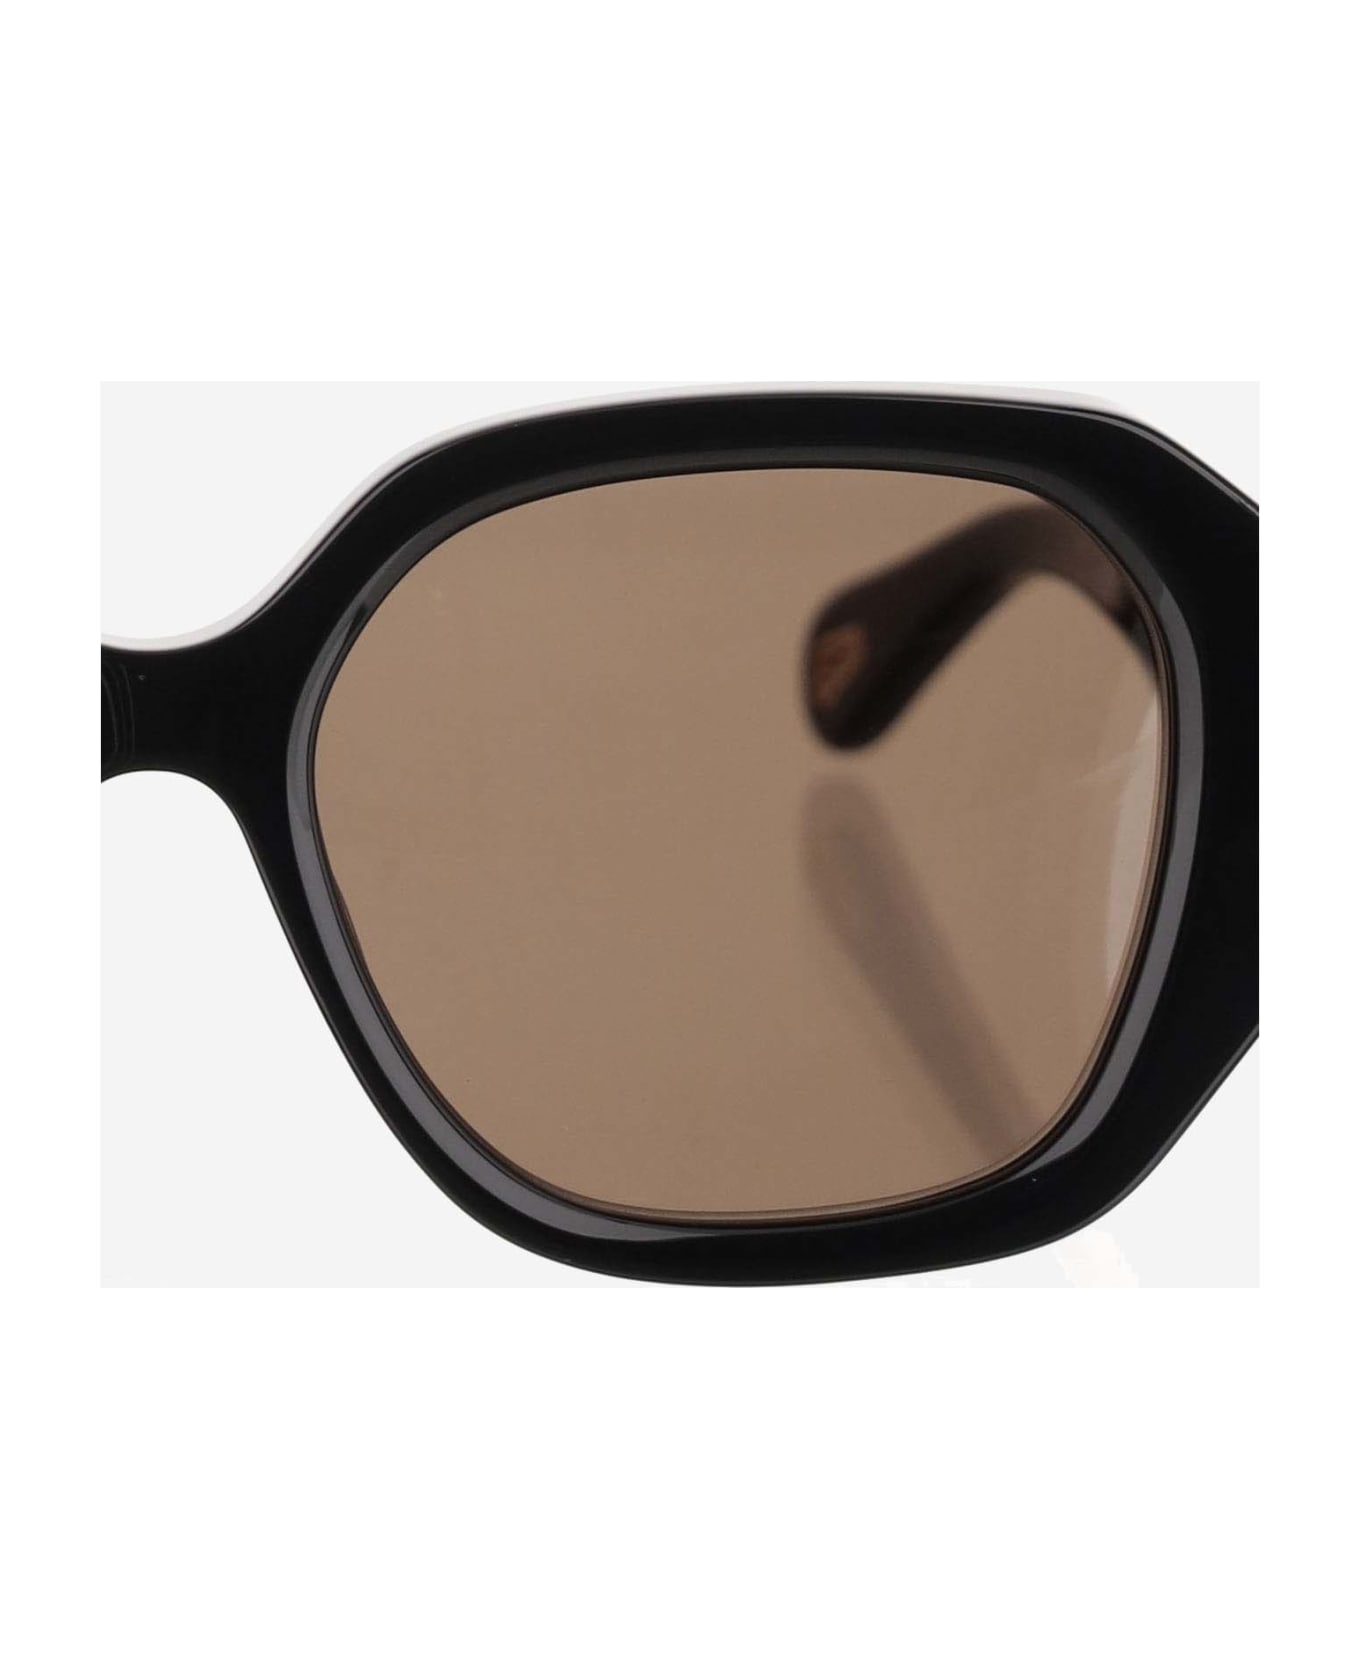 Chloé Logo Sunglasses - Black サングラス